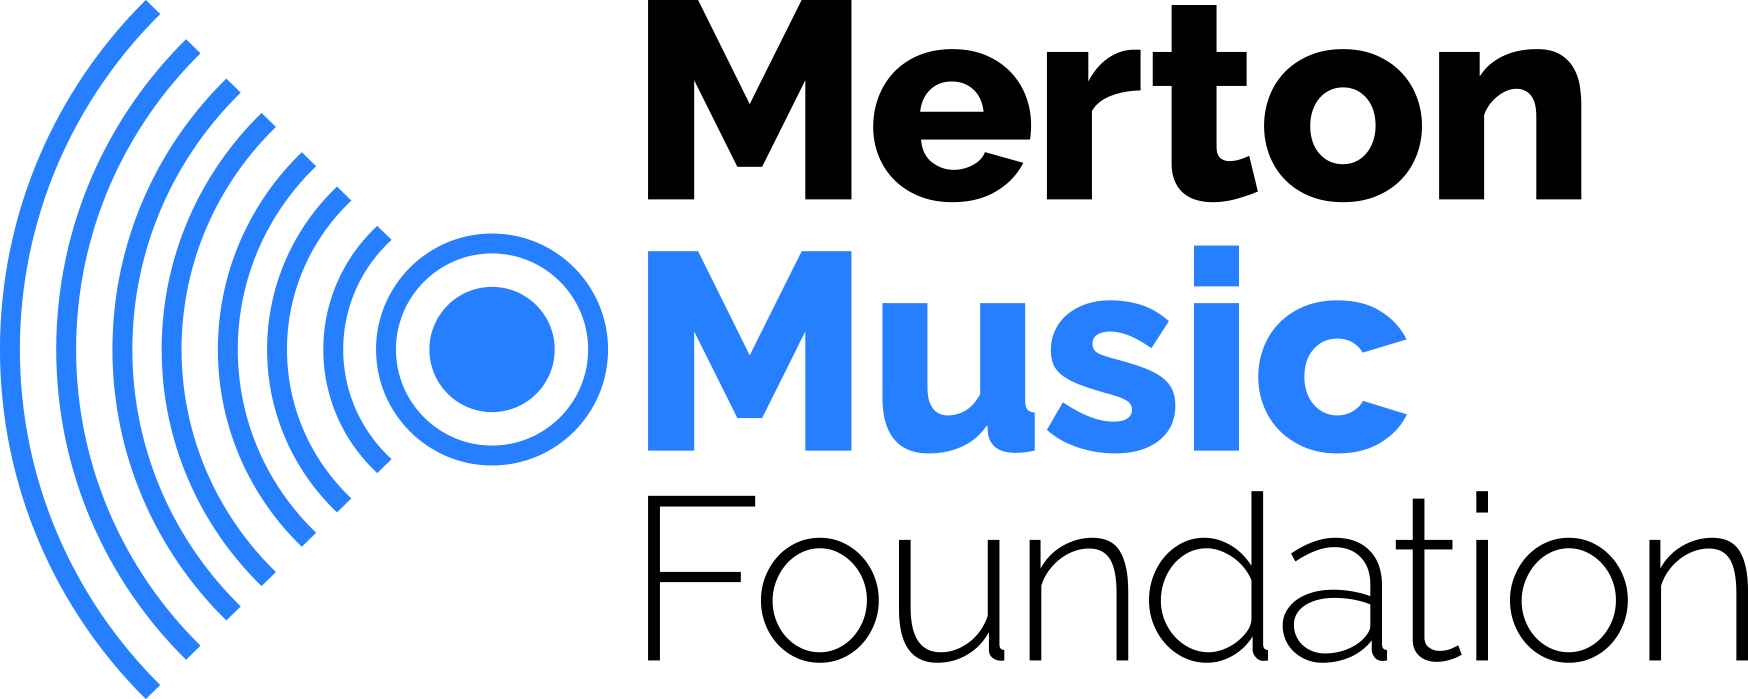 Merton Music Foundation Logo